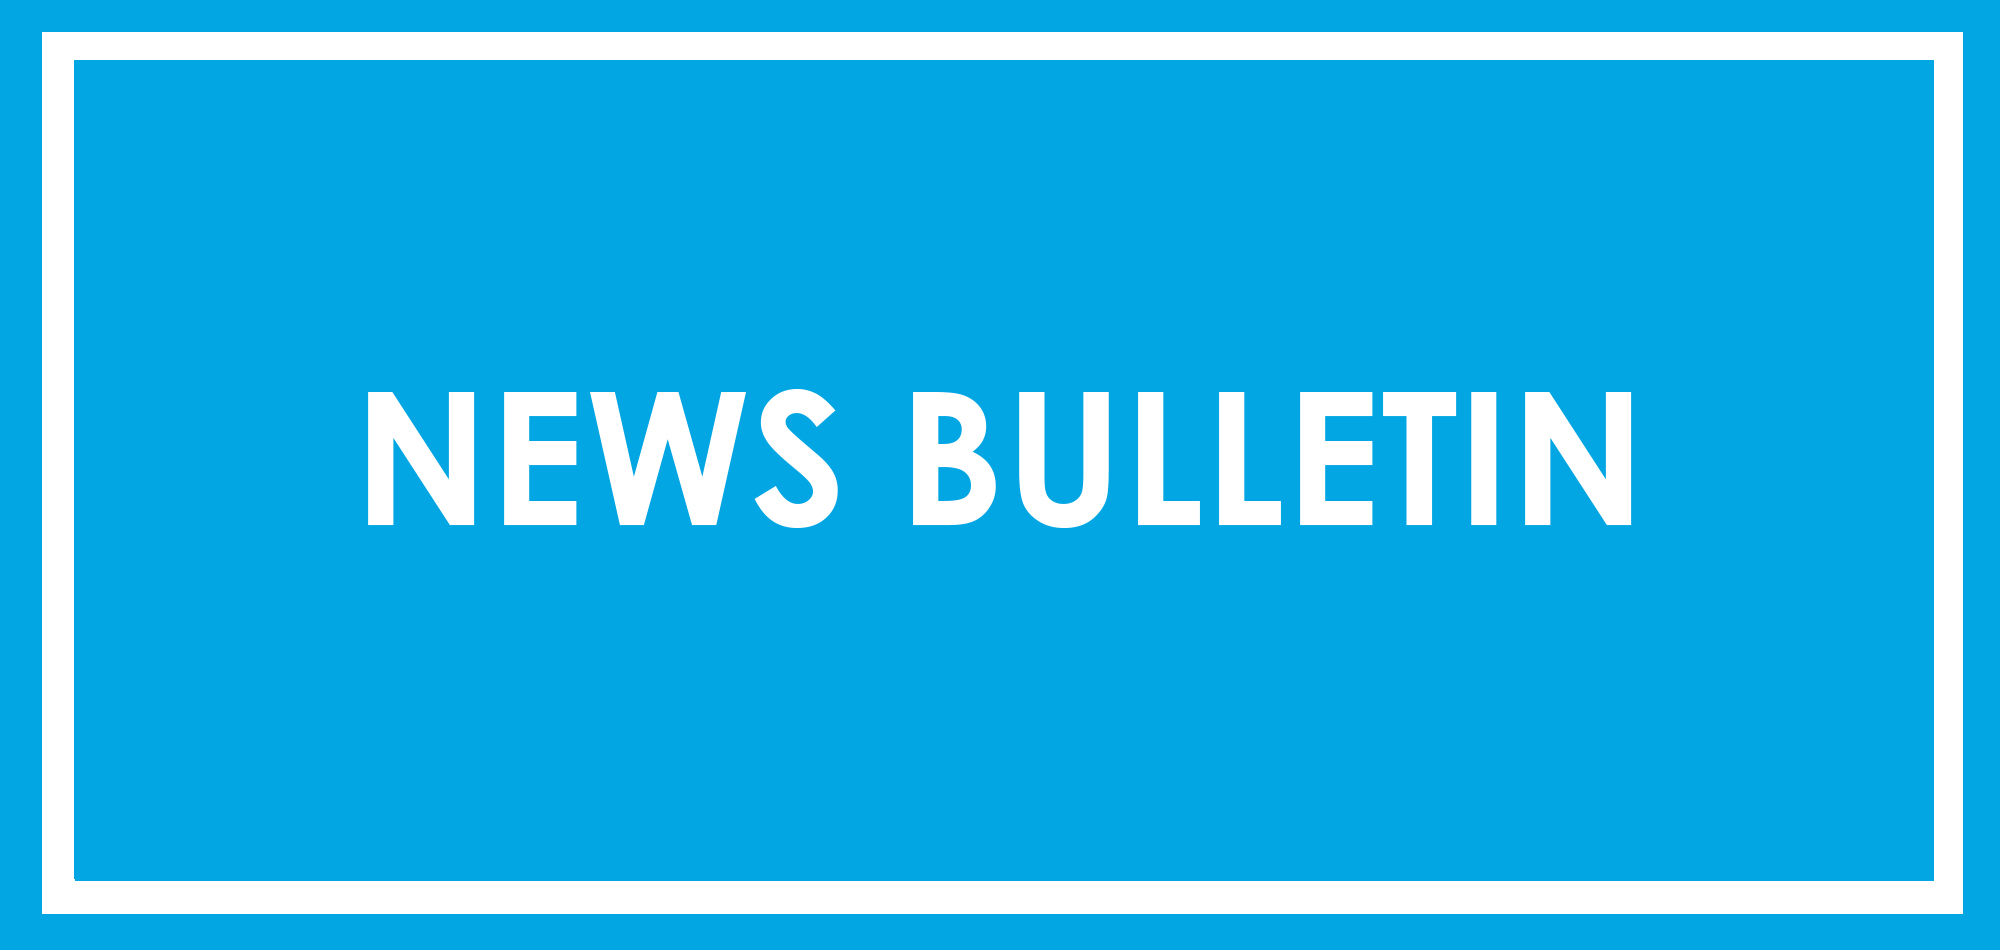 News Bulletin - 26.01.22